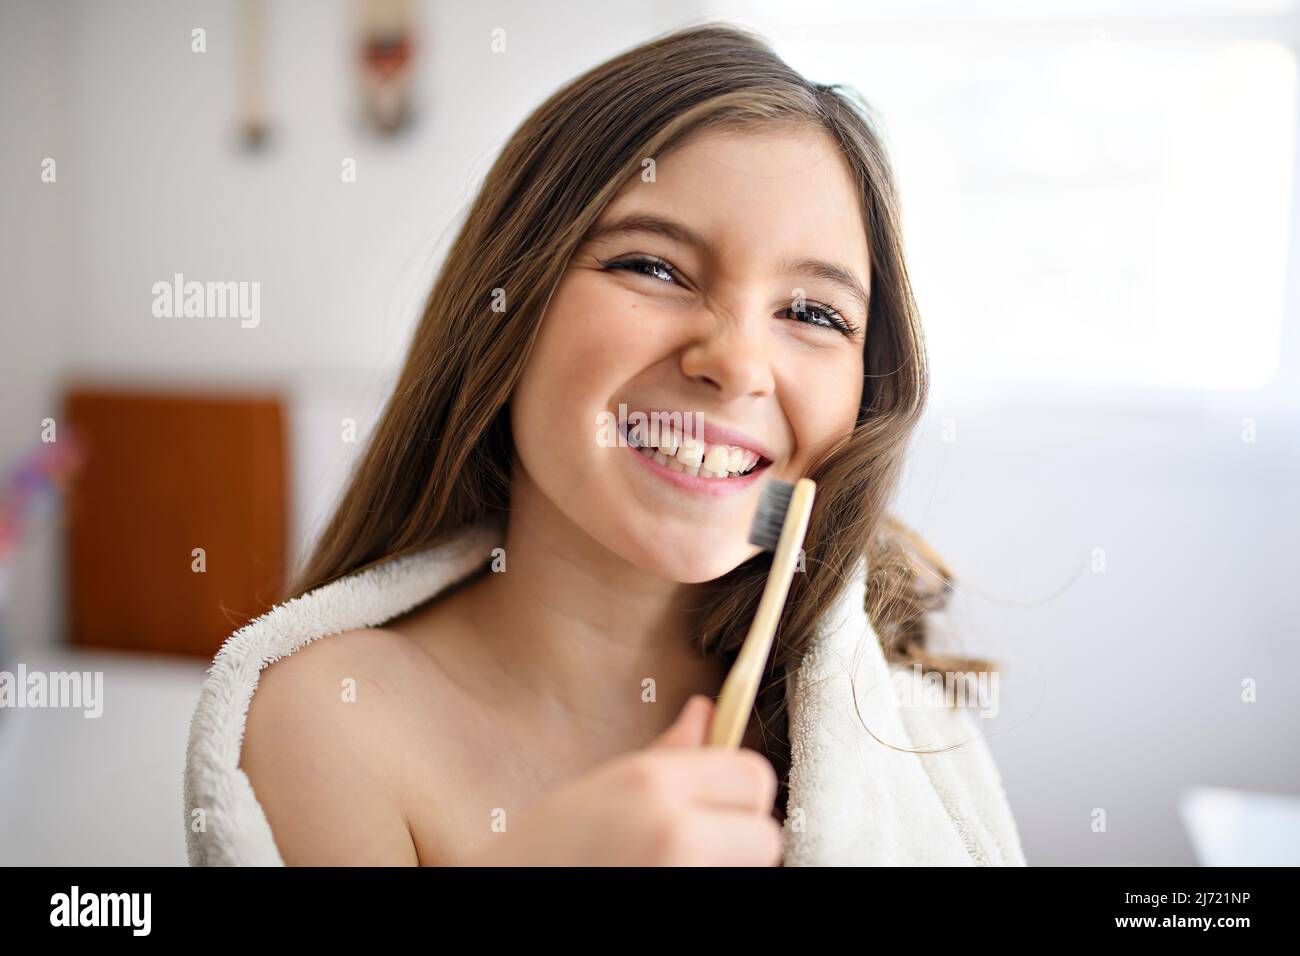 A Little girl brushing teeth in bathroom Stock Photo